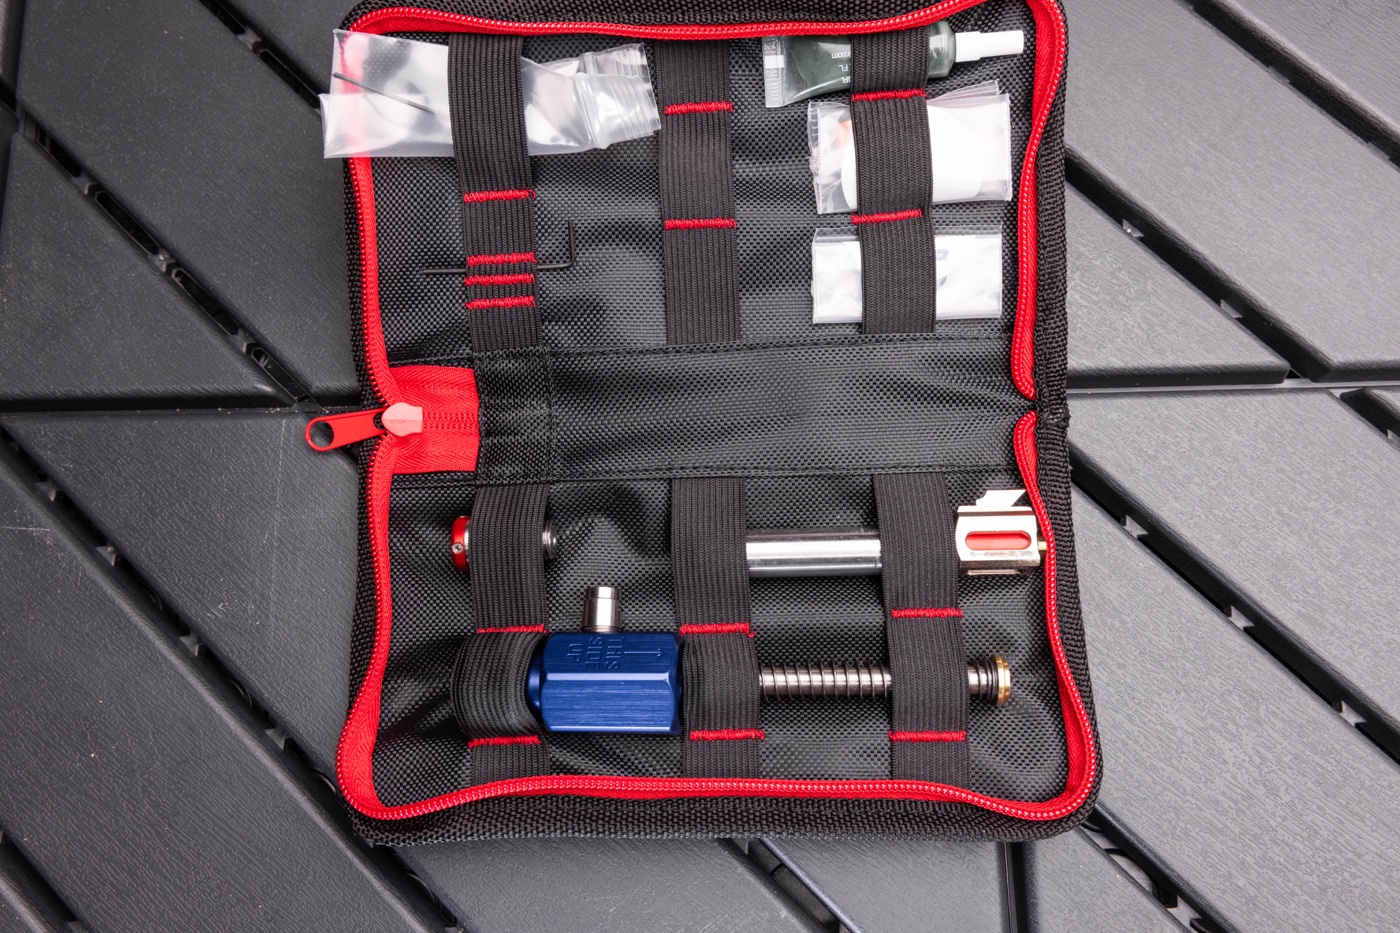 coolfire trainer kit